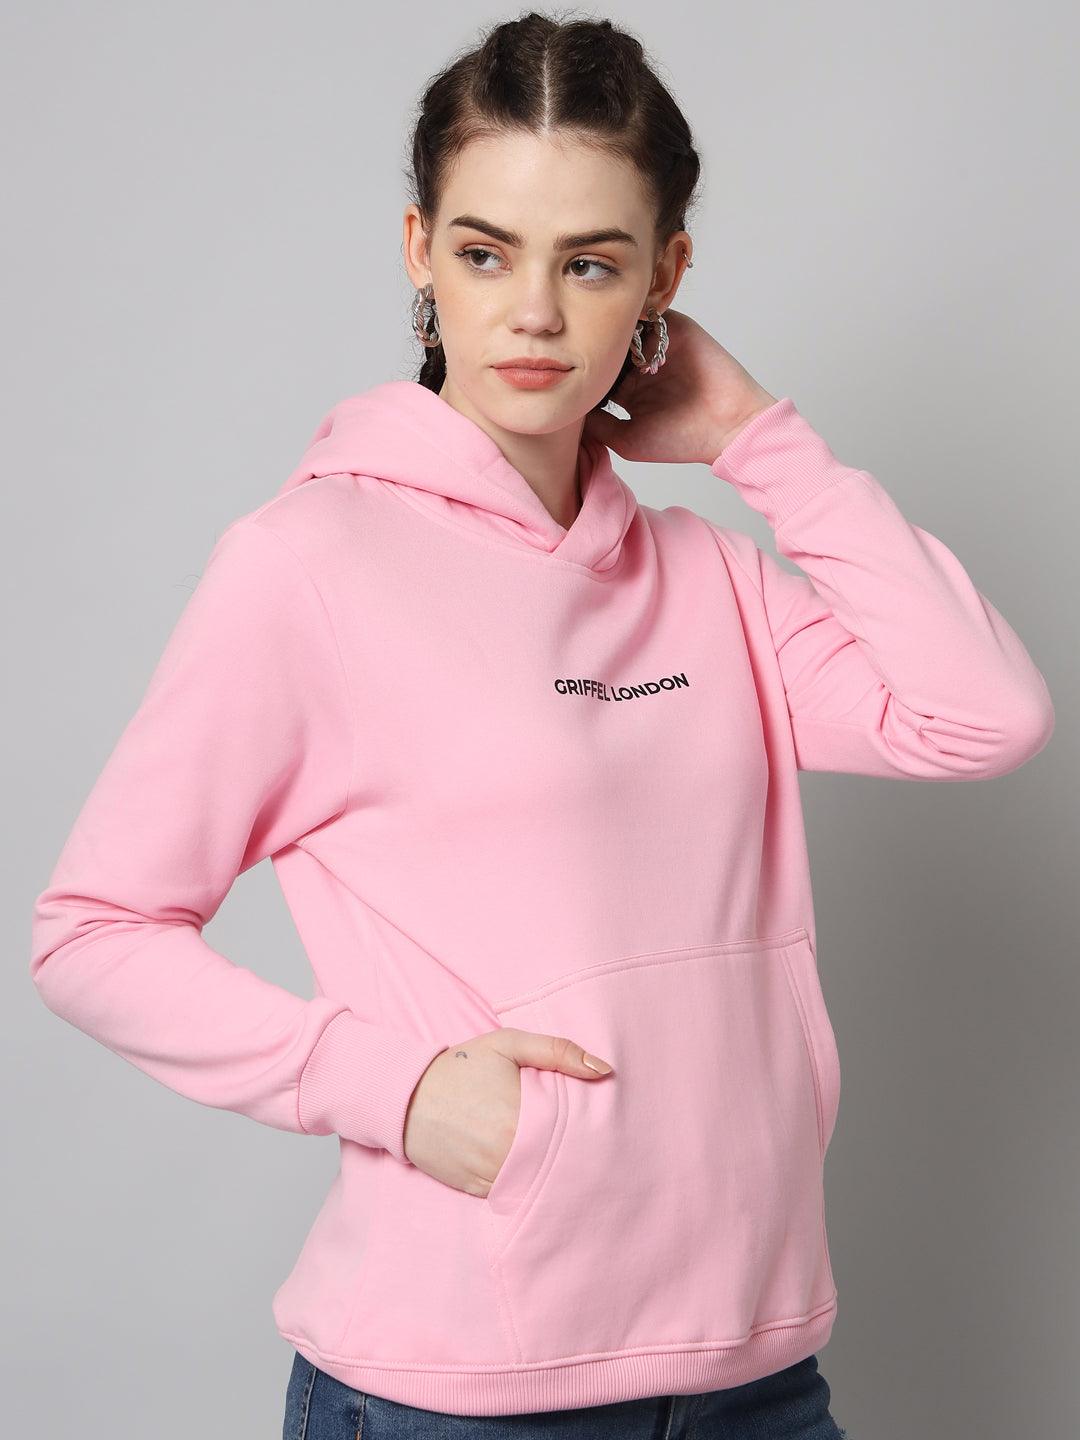 Griffel Women’s Cotton Fleece Full Sleeve Pink Hoodie Sweatshirt - griffel